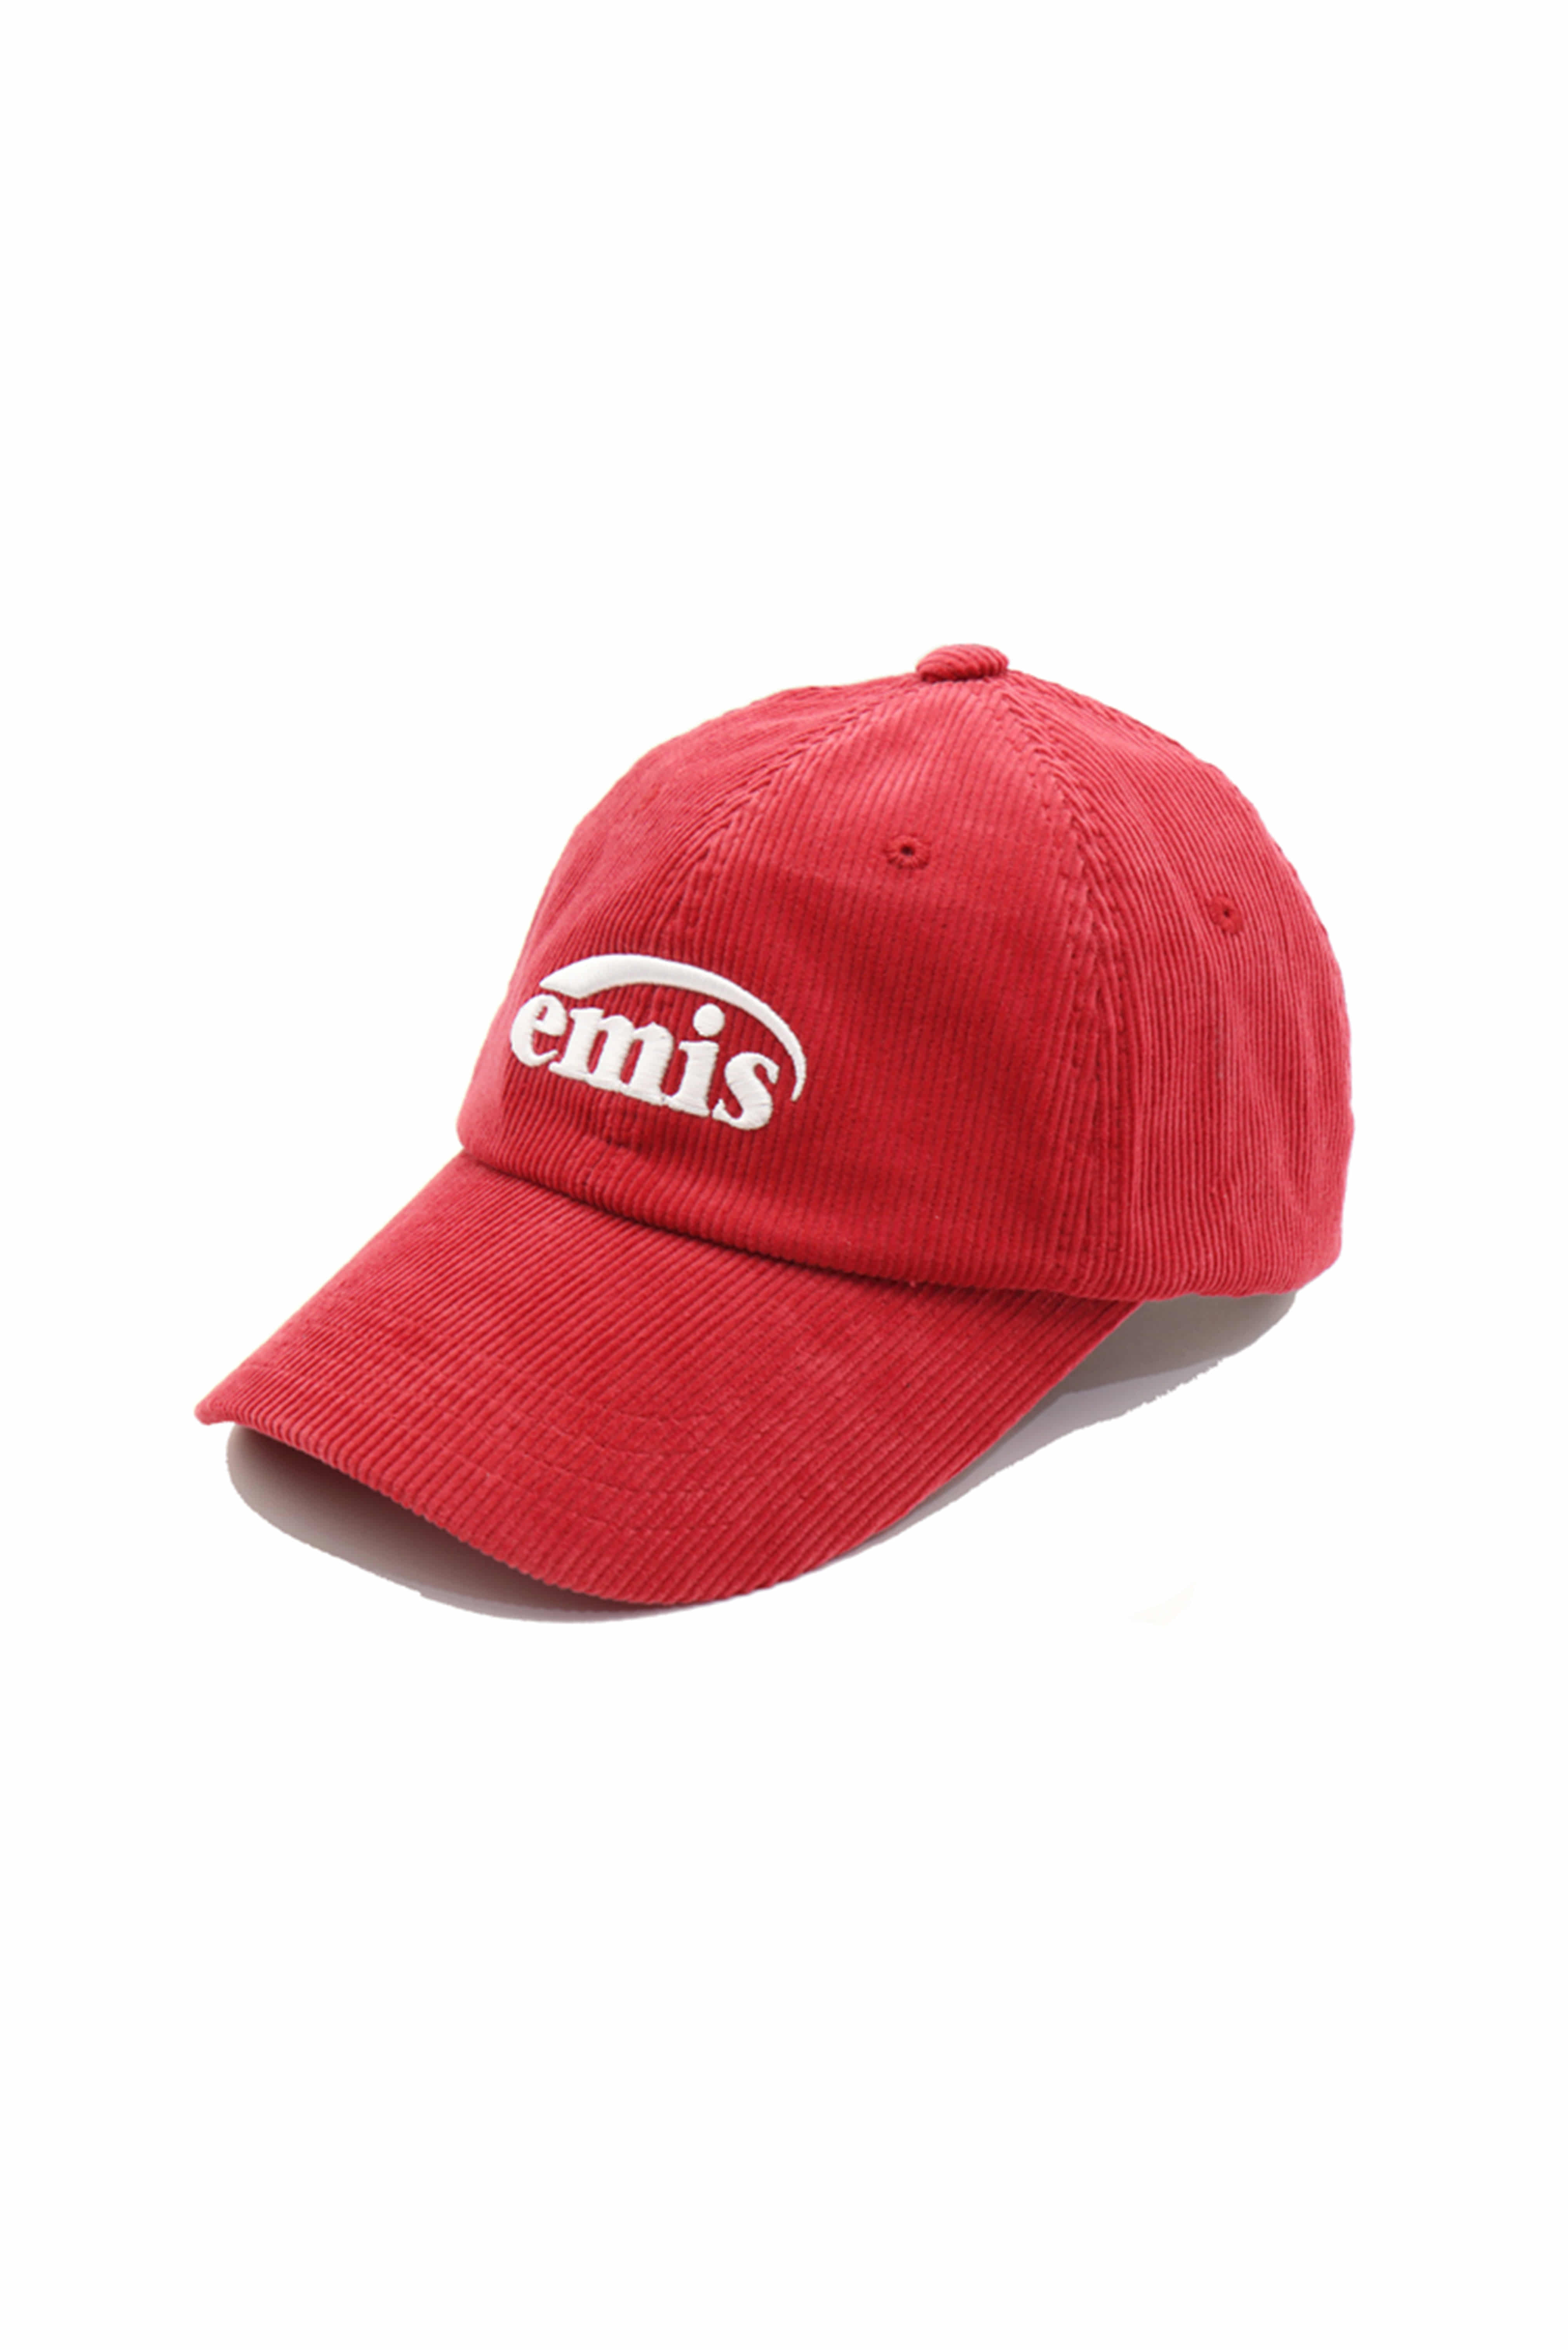 NEW LOGO CORDUROY EMIS CAP-RED